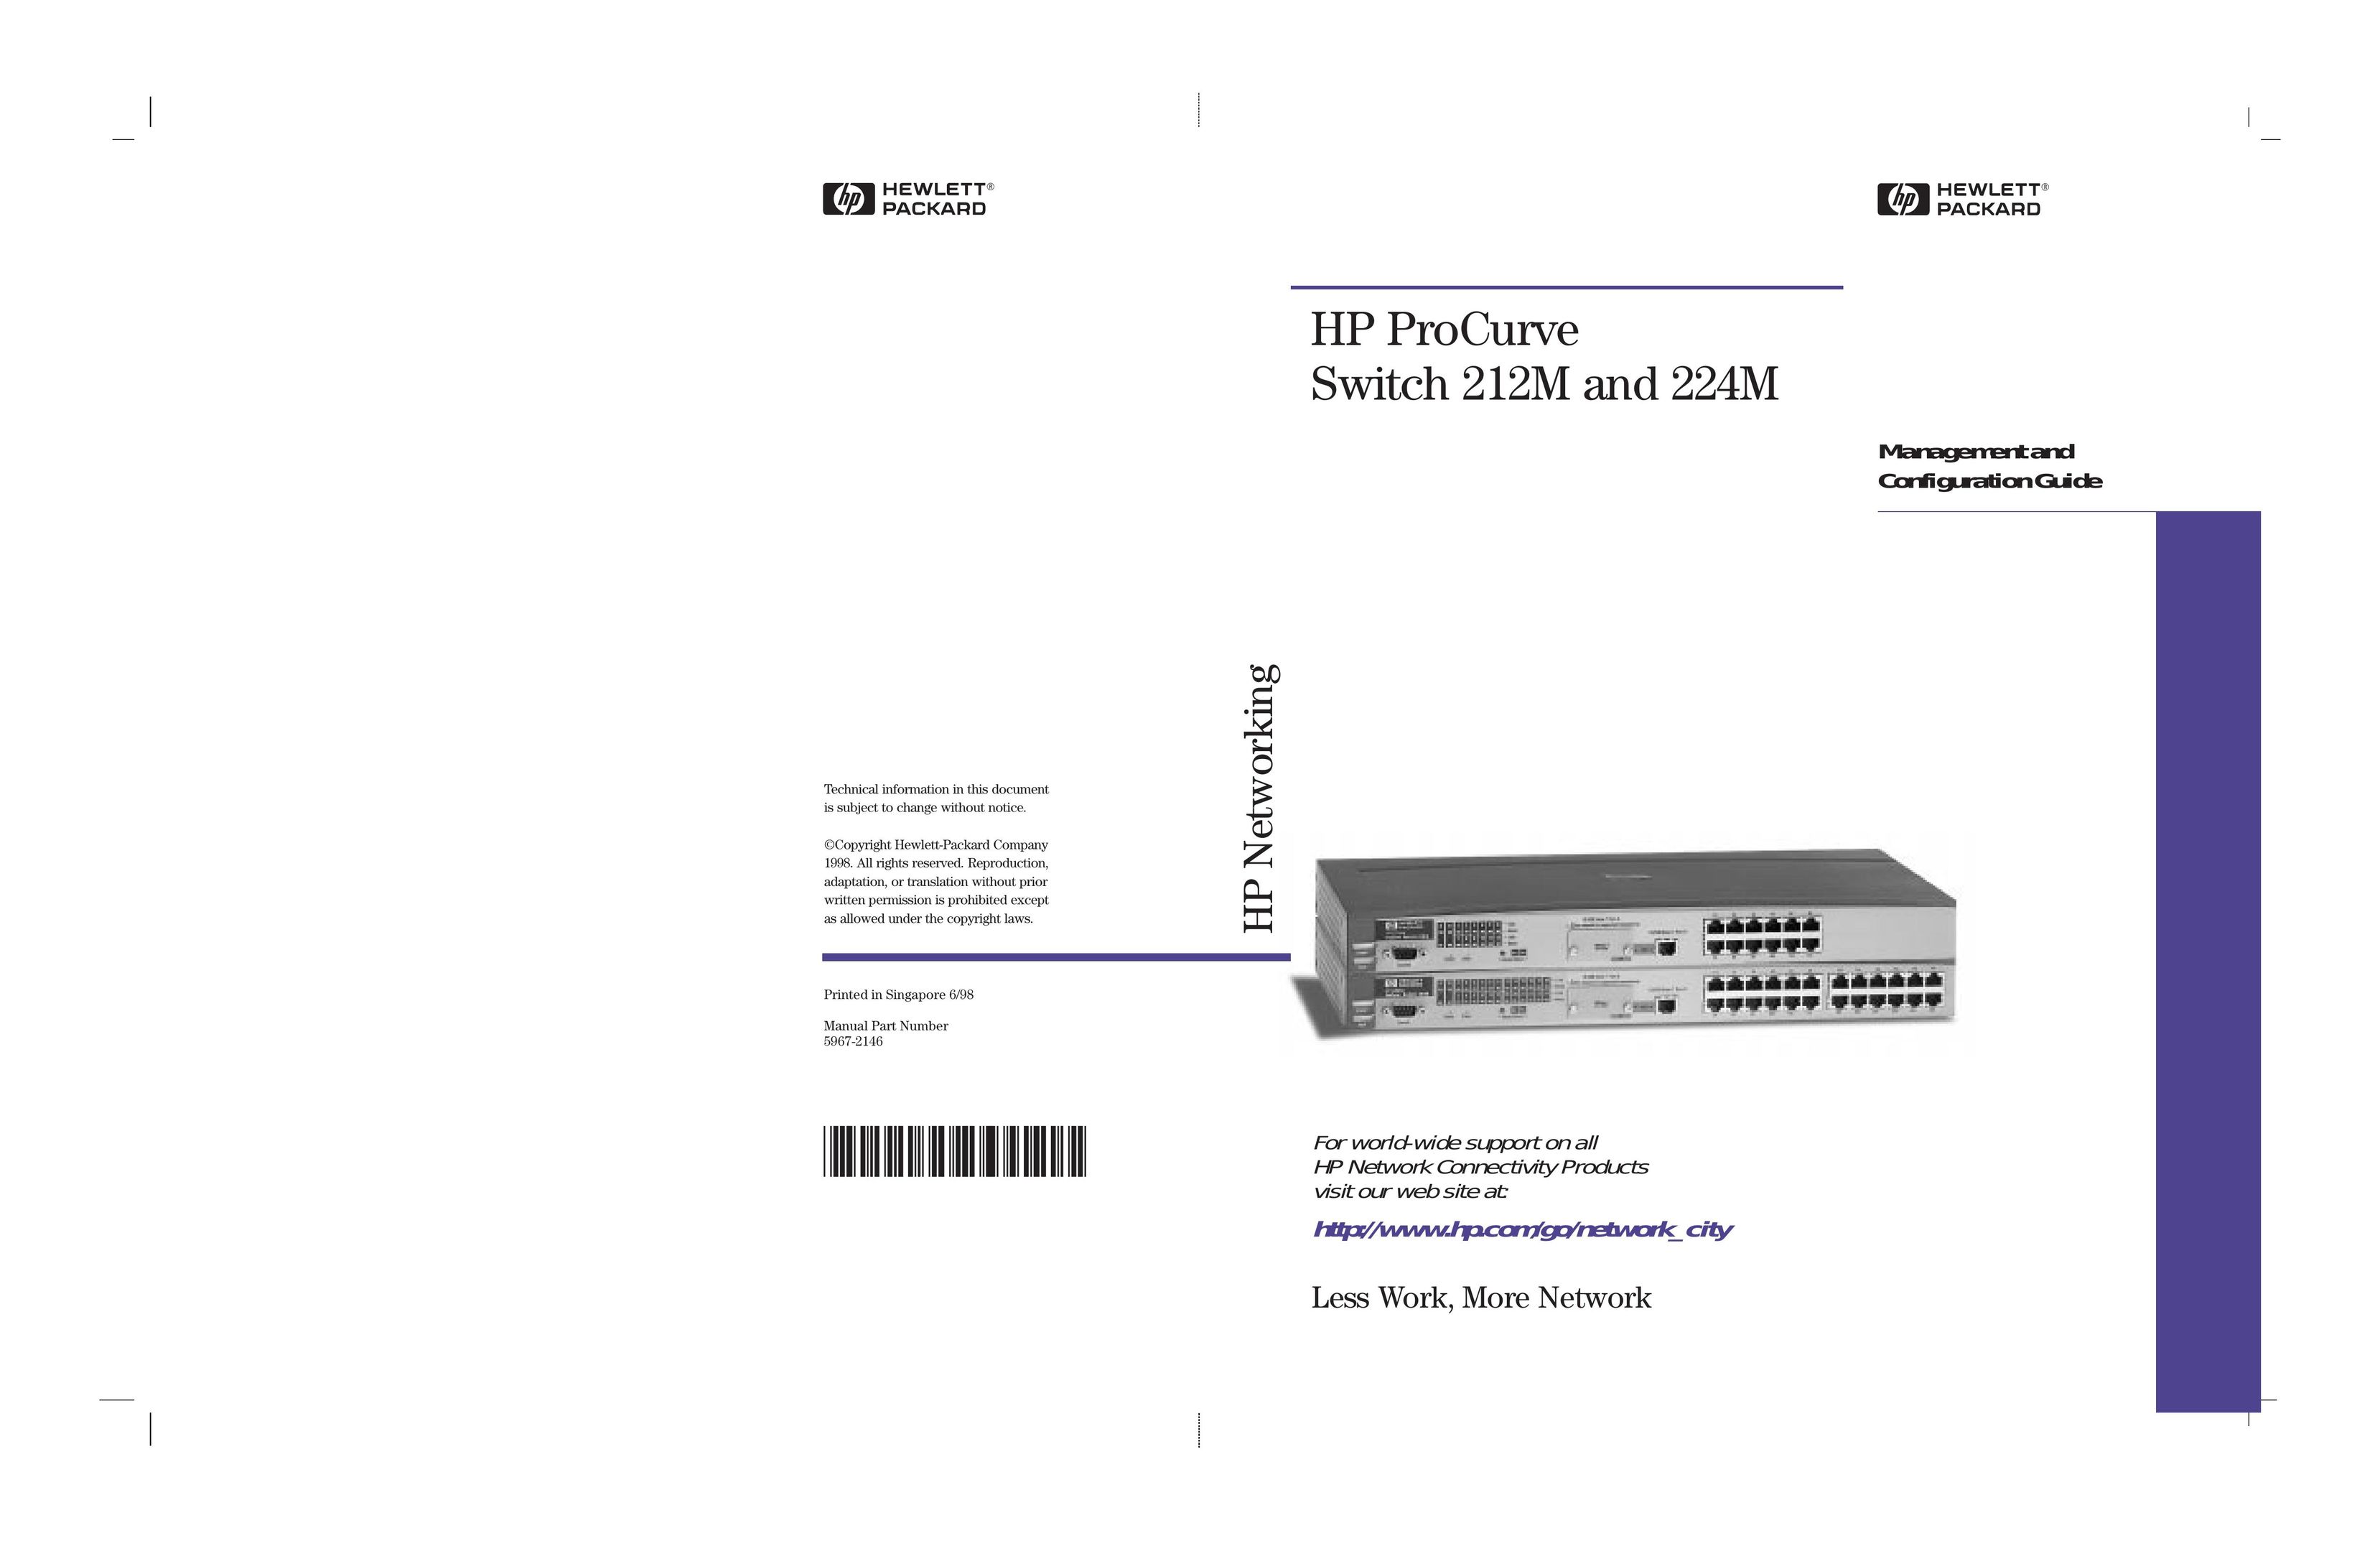 HP (Hewlett-Packard) 212M Switch User Manual